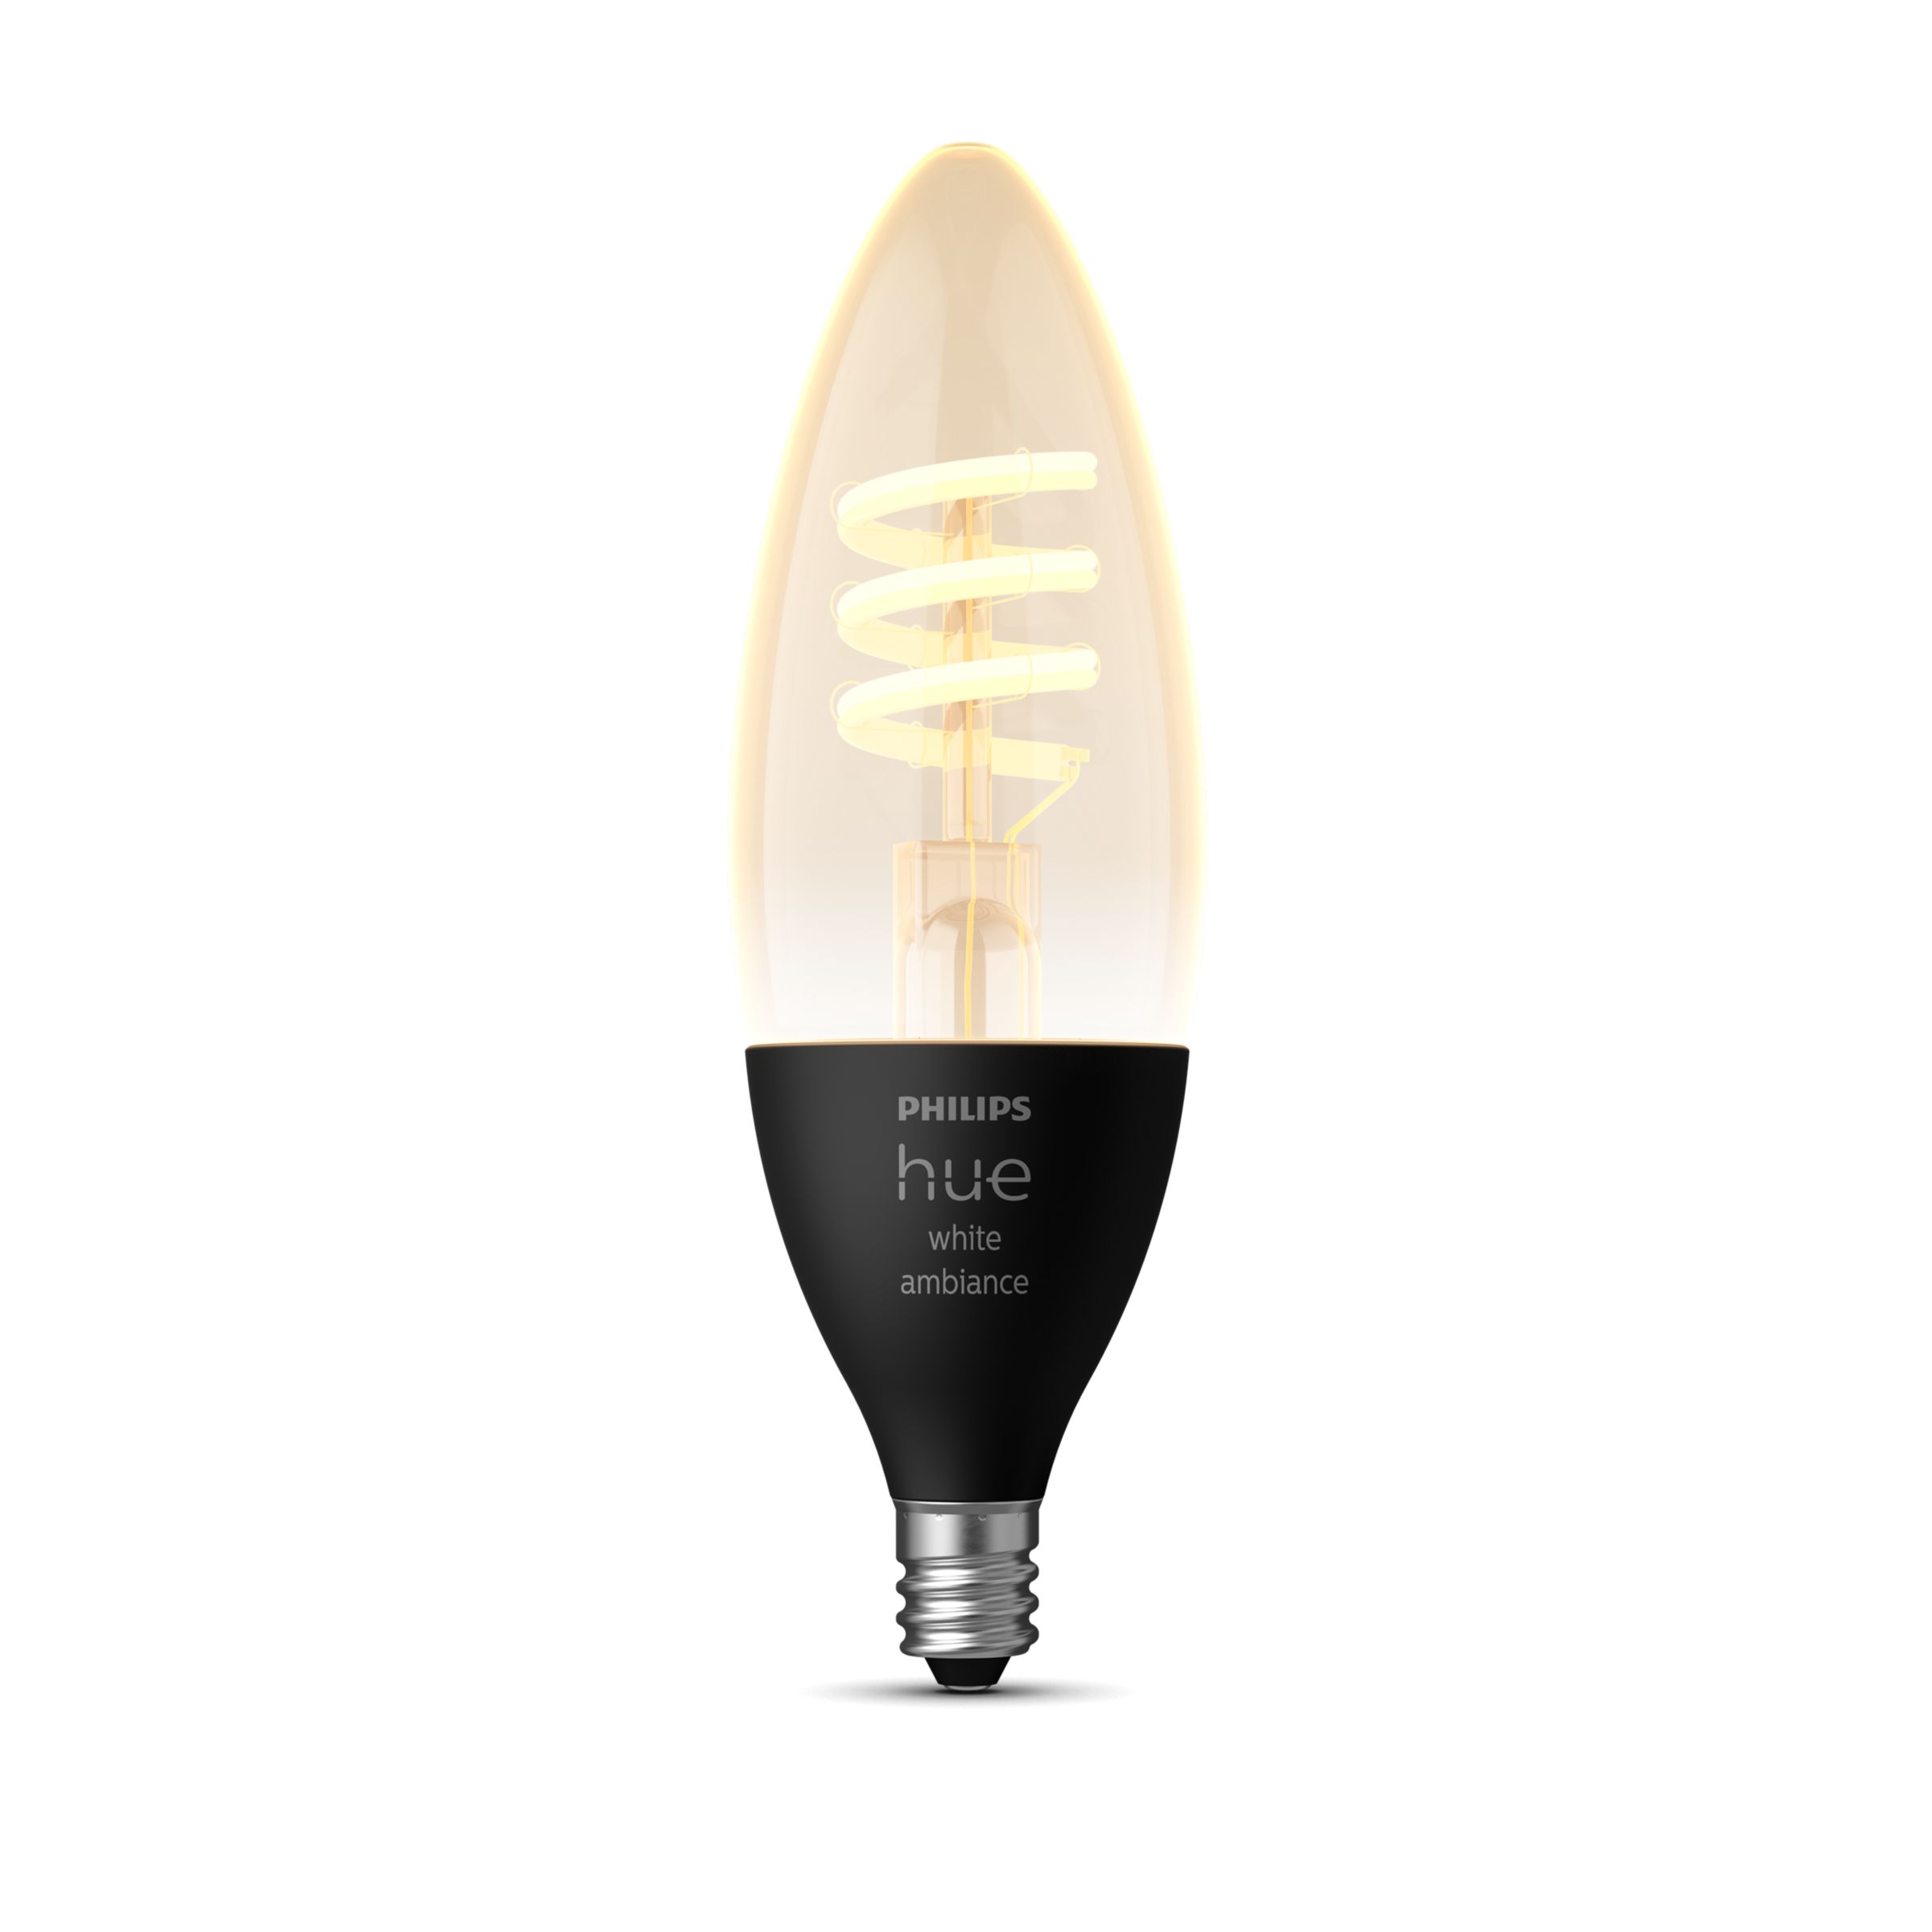 medlem Skinne Kartofler Hue White Ambiance Filament Candle - E12 smart bulb | Philips Hue US